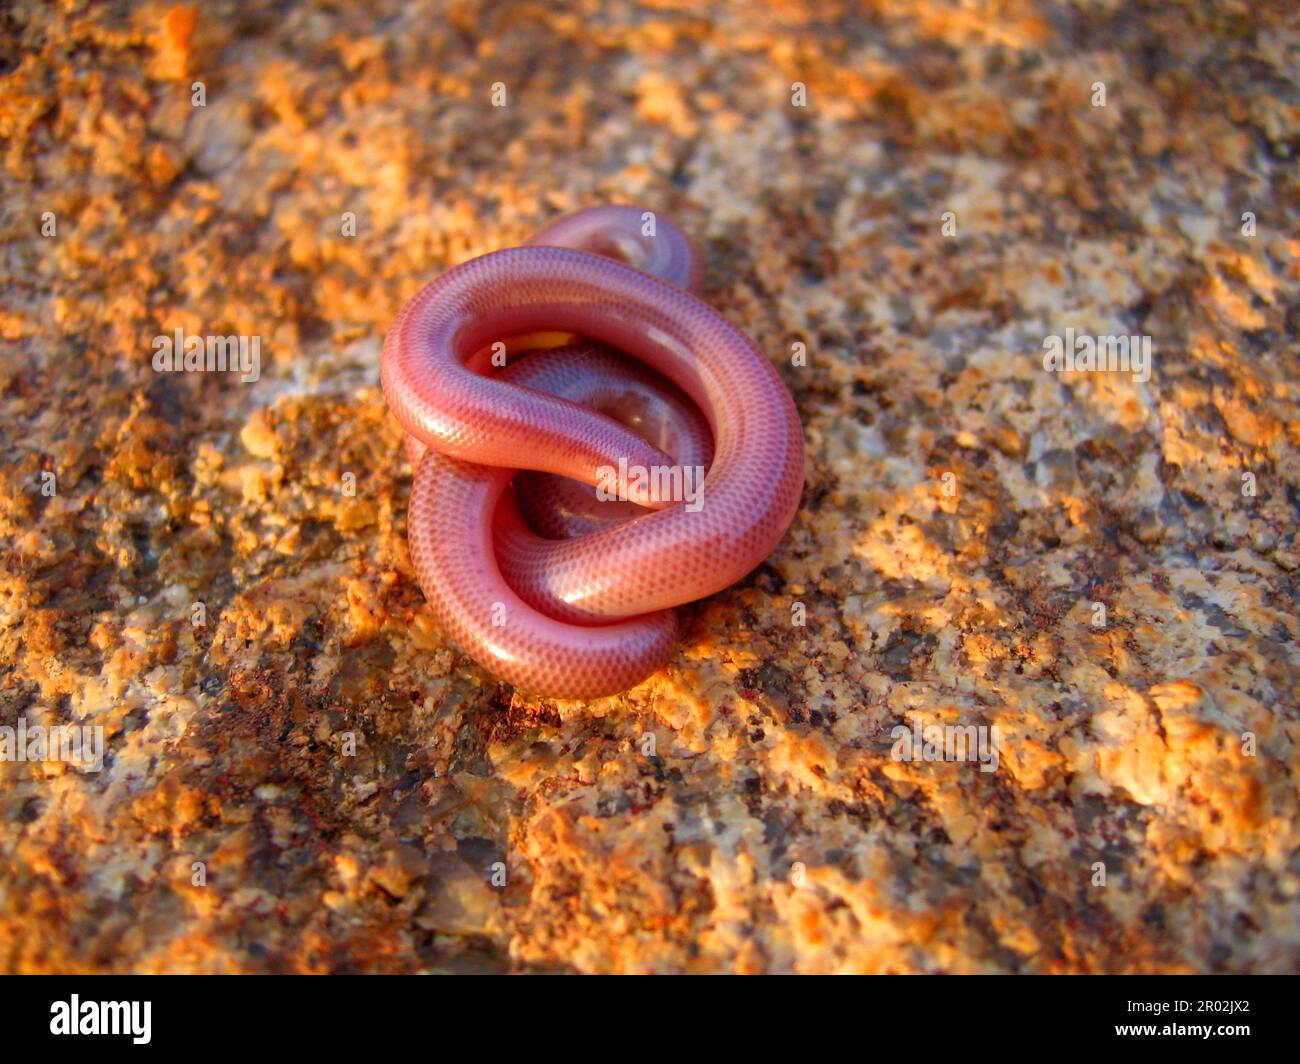 Worm snake Stock Photo